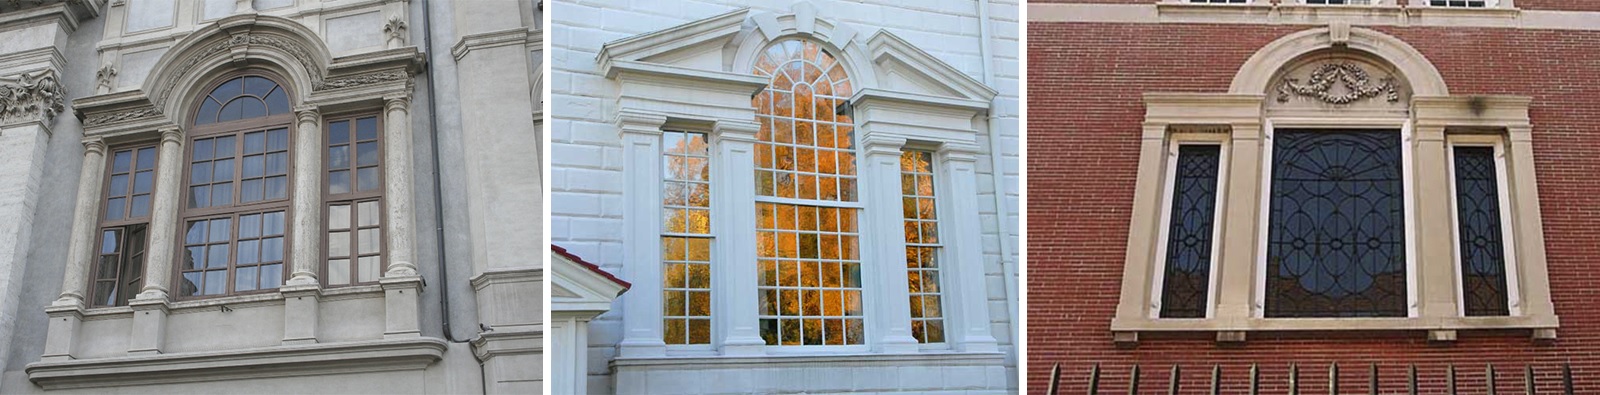 Palladian windows